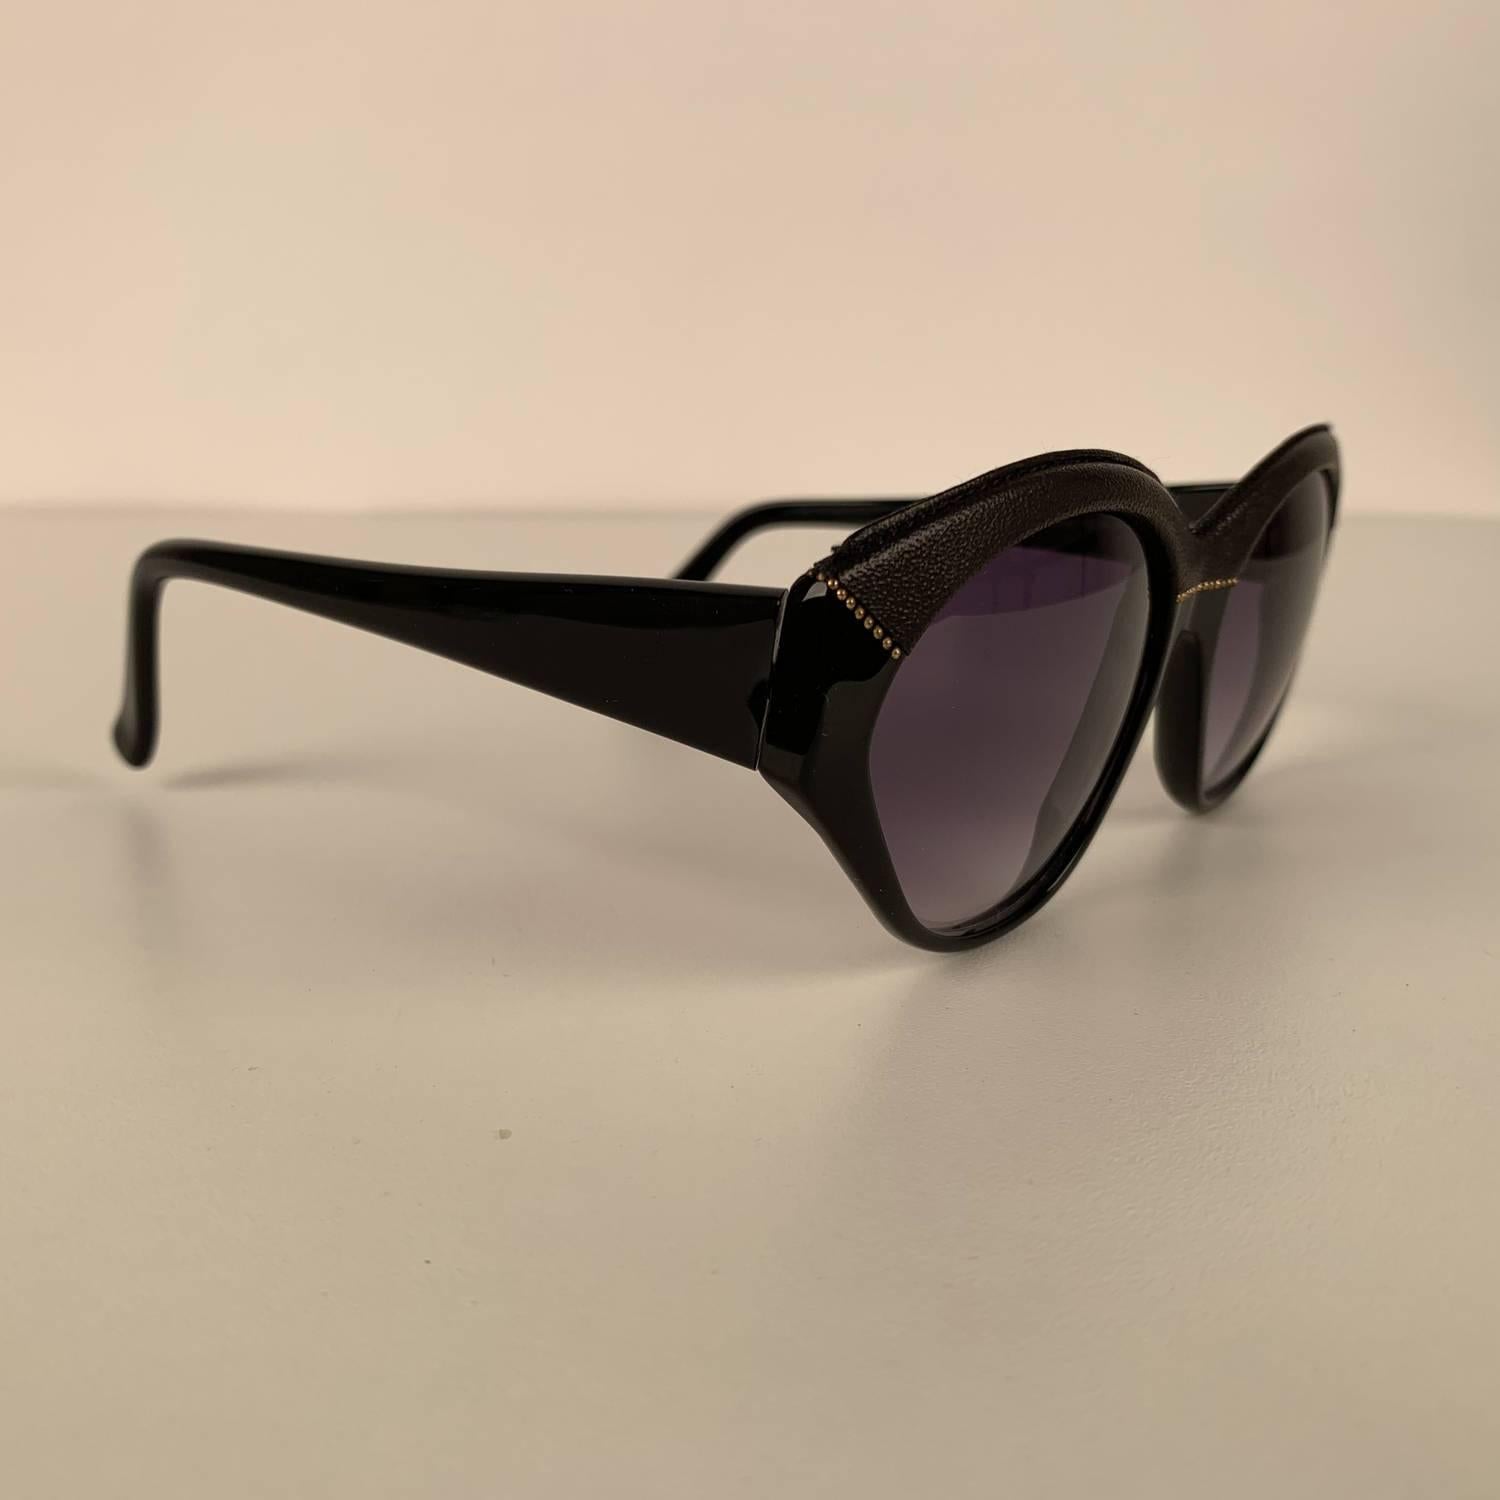 Yves Saint Laurent Vintage Black Sunglasses 8916 P367 with Leather 4